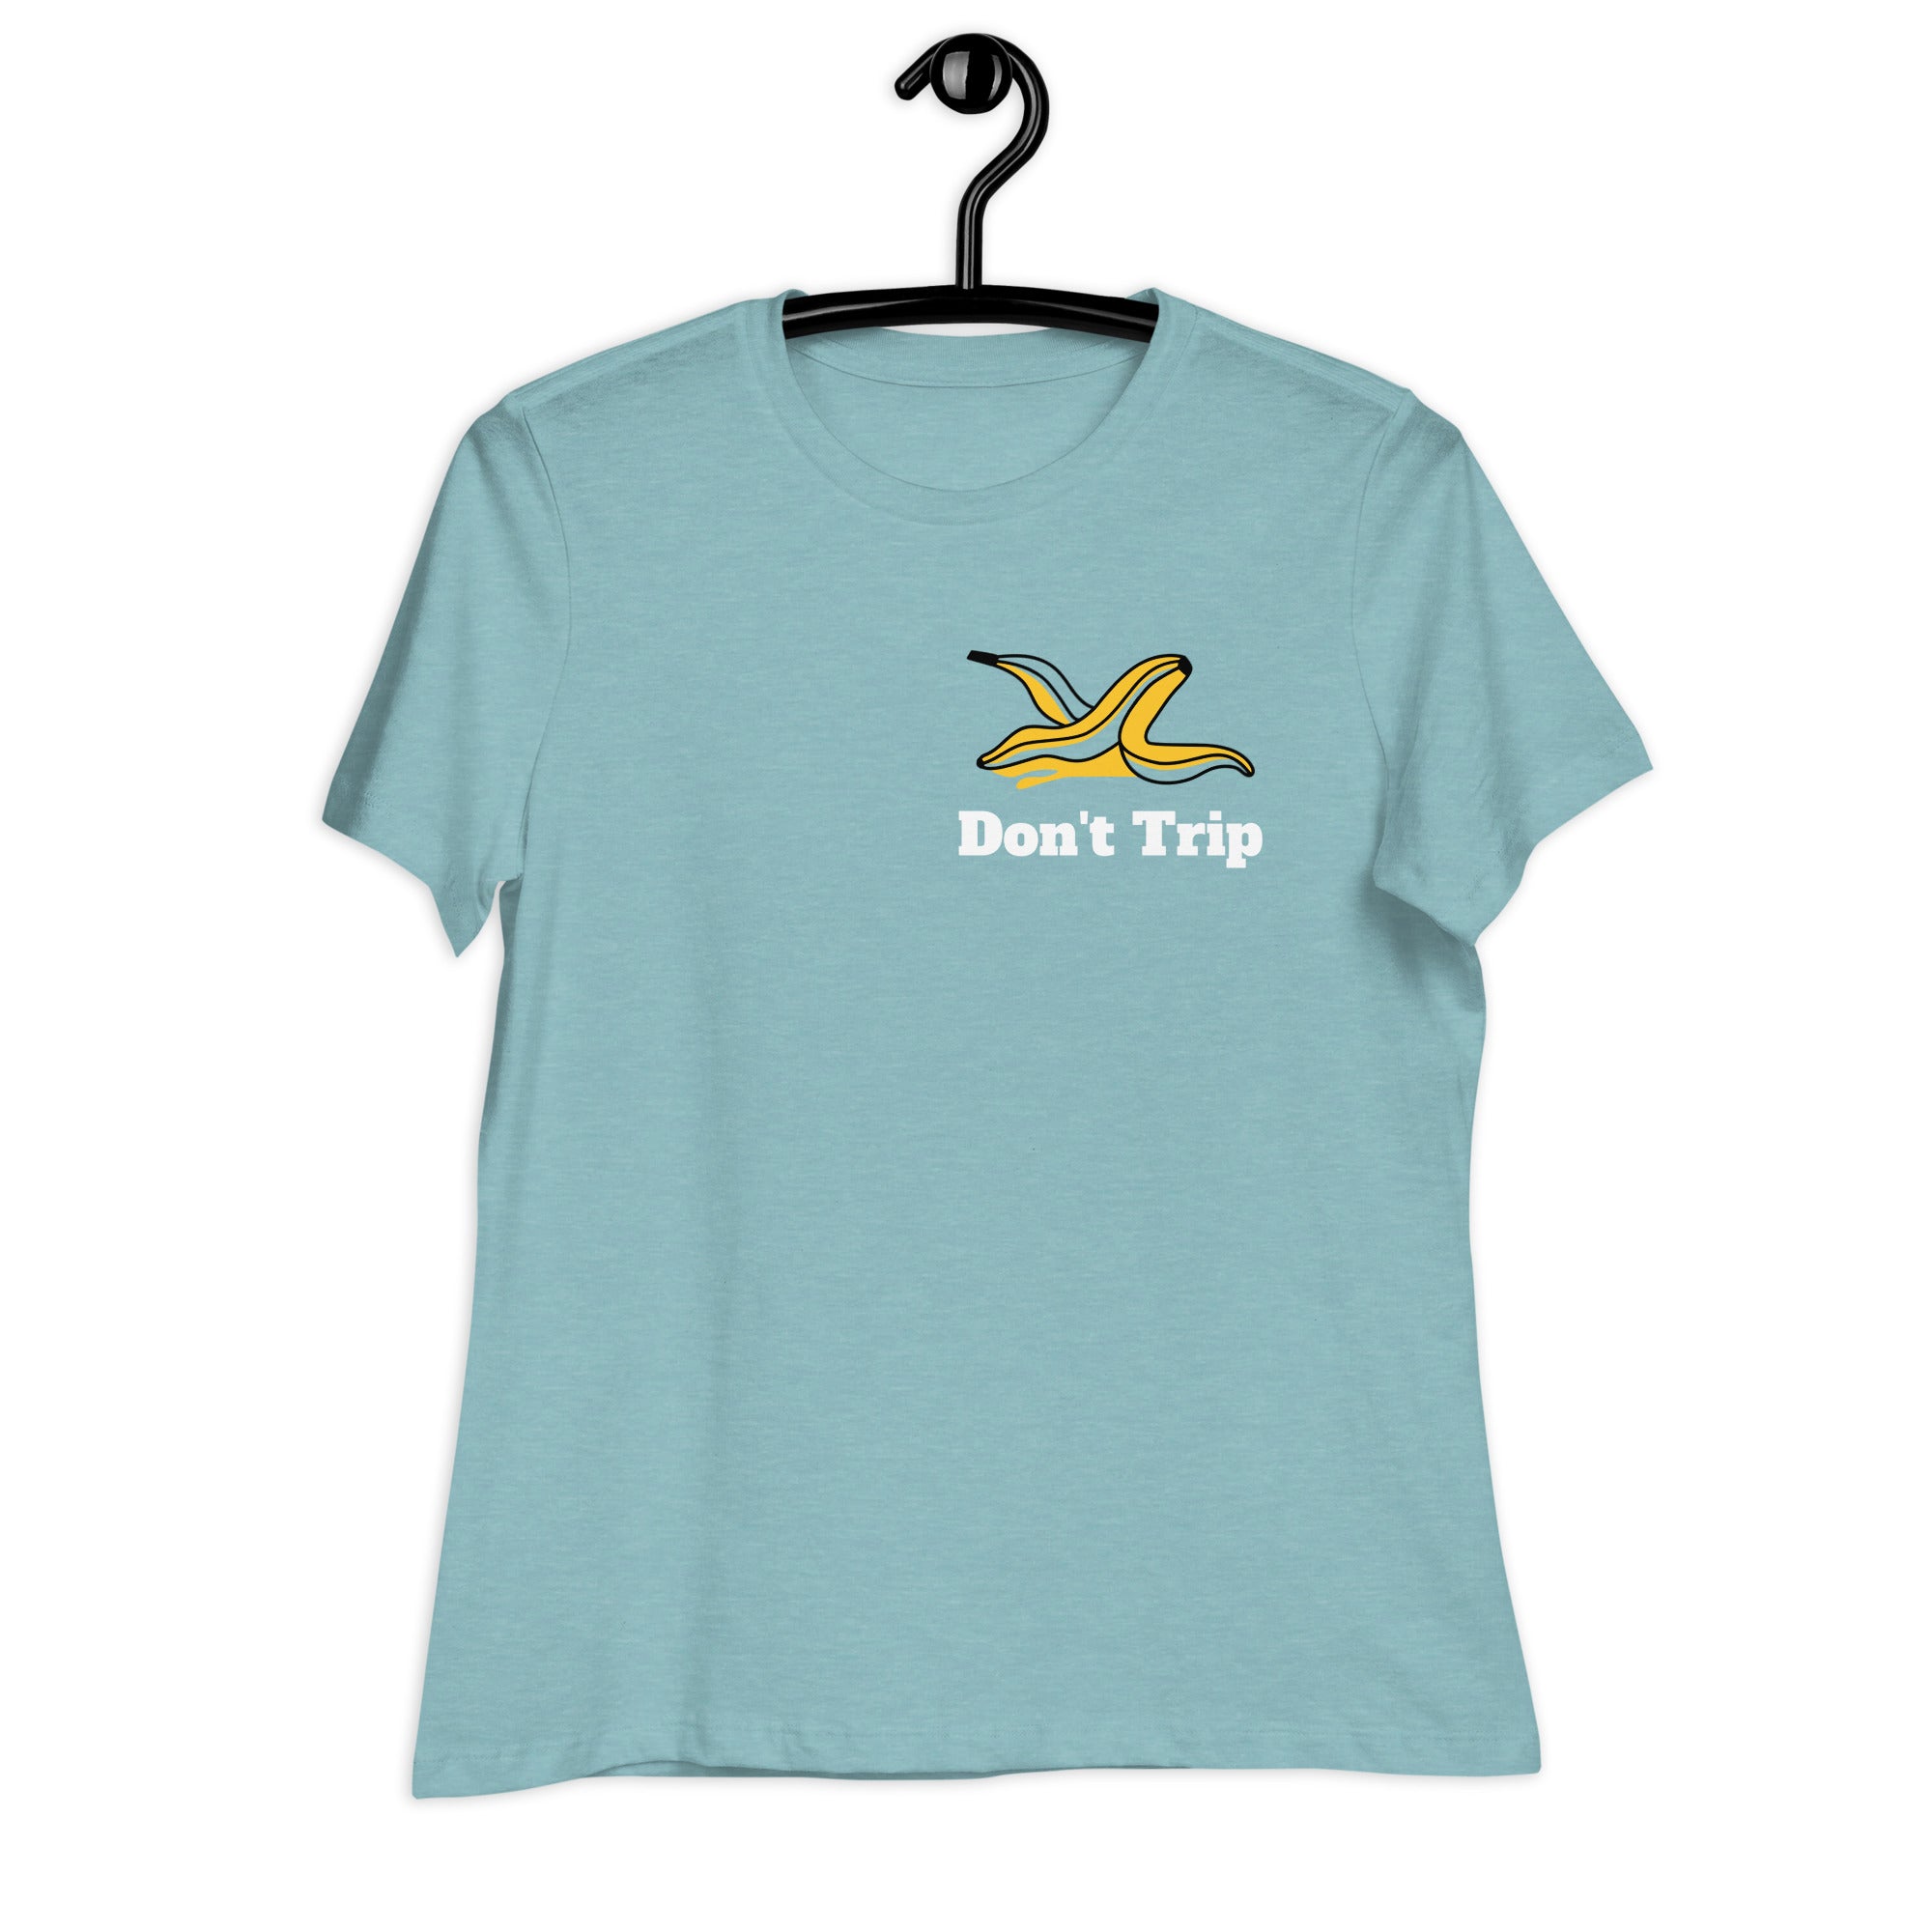 Don't trip-Women's Relaxed T-Shirt